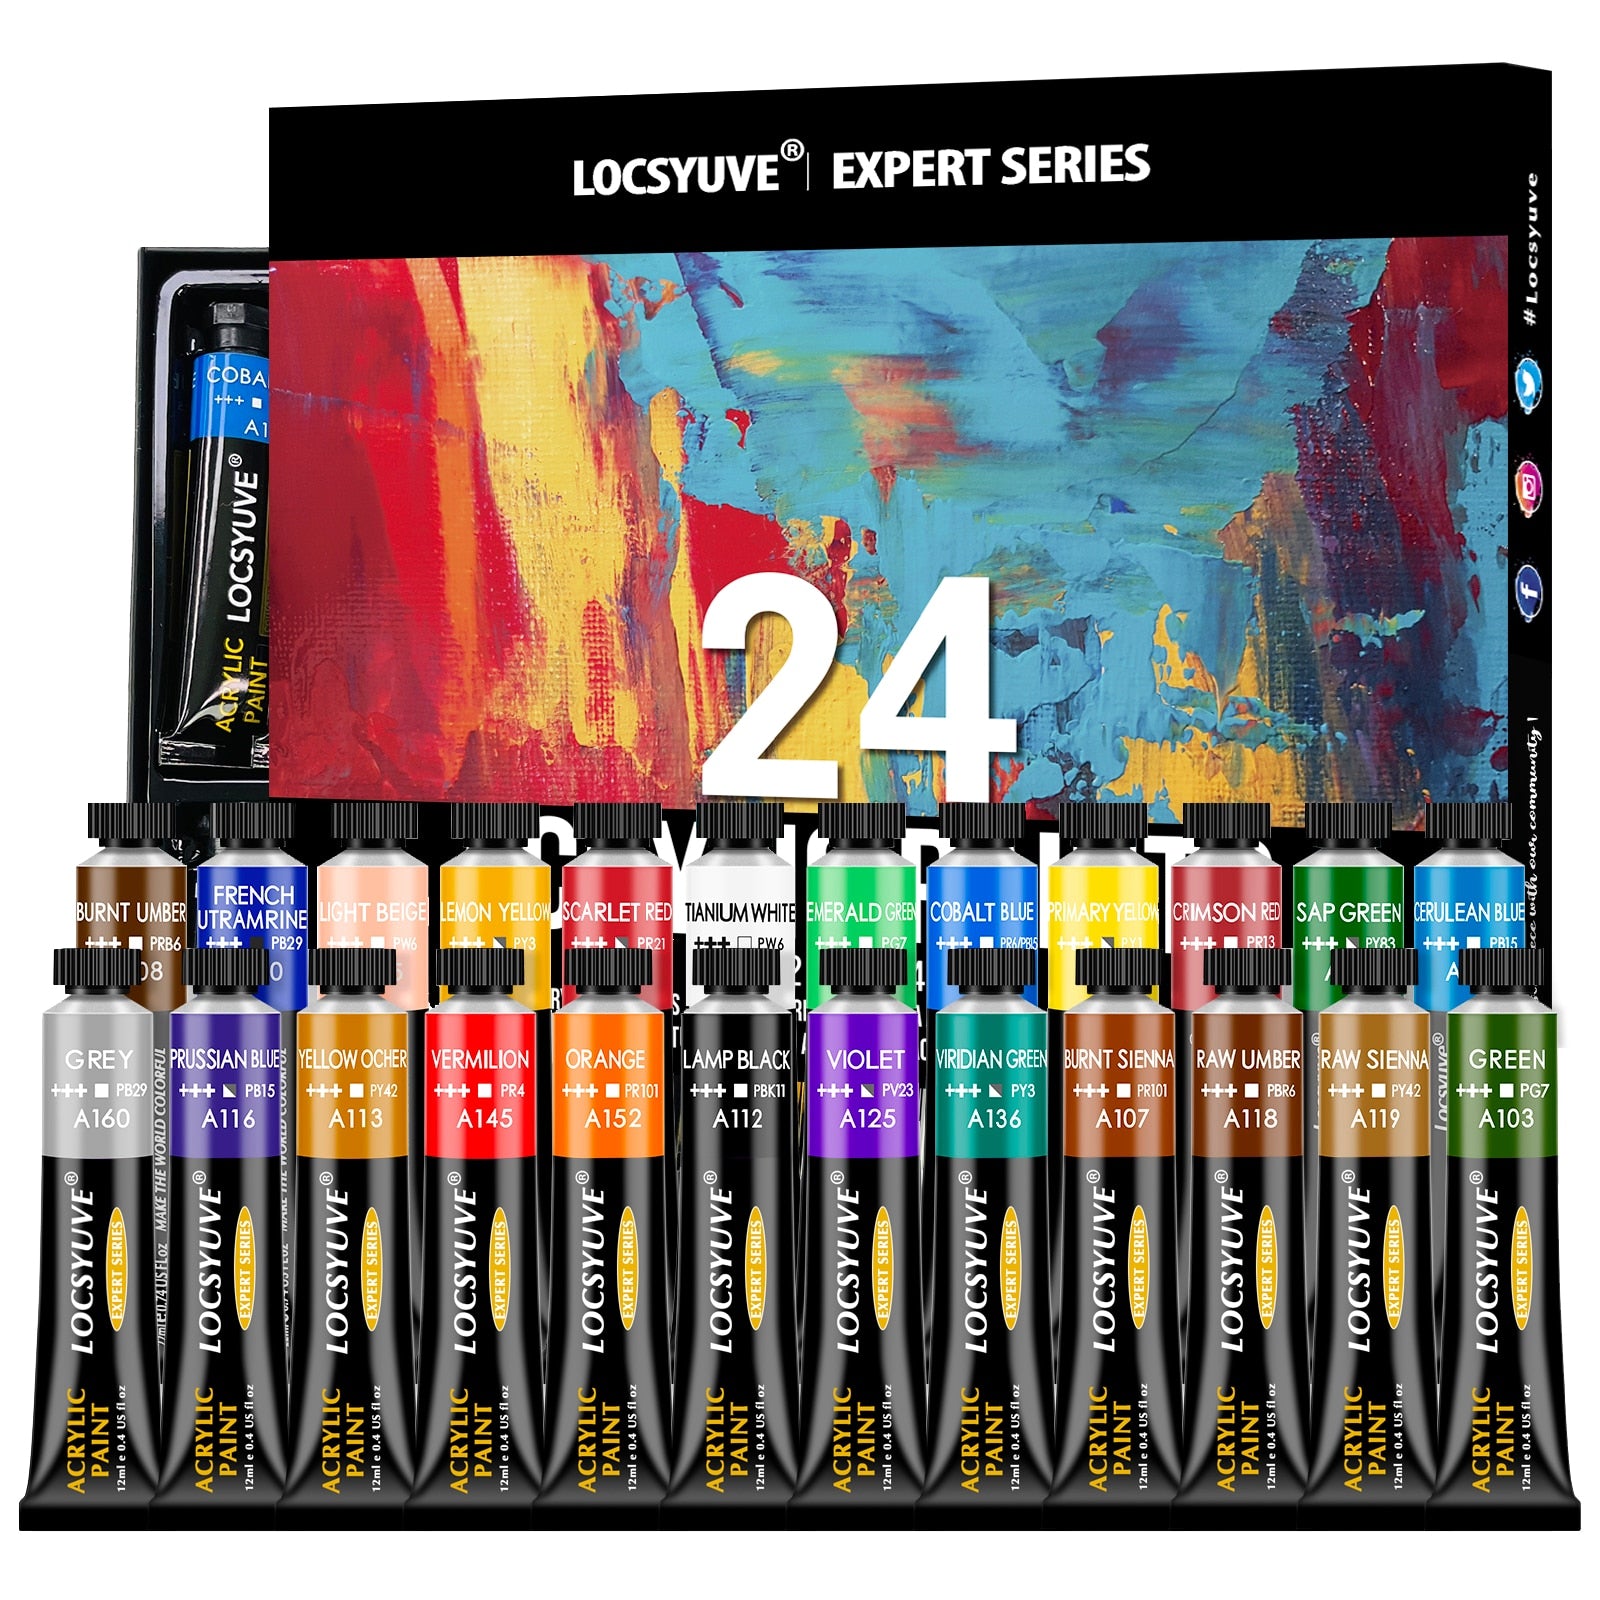 Arteza Acrylic Paint, Set of 12 Colors/Tubes (22 Ml/0.74 oz.) with Storage Box, Rich